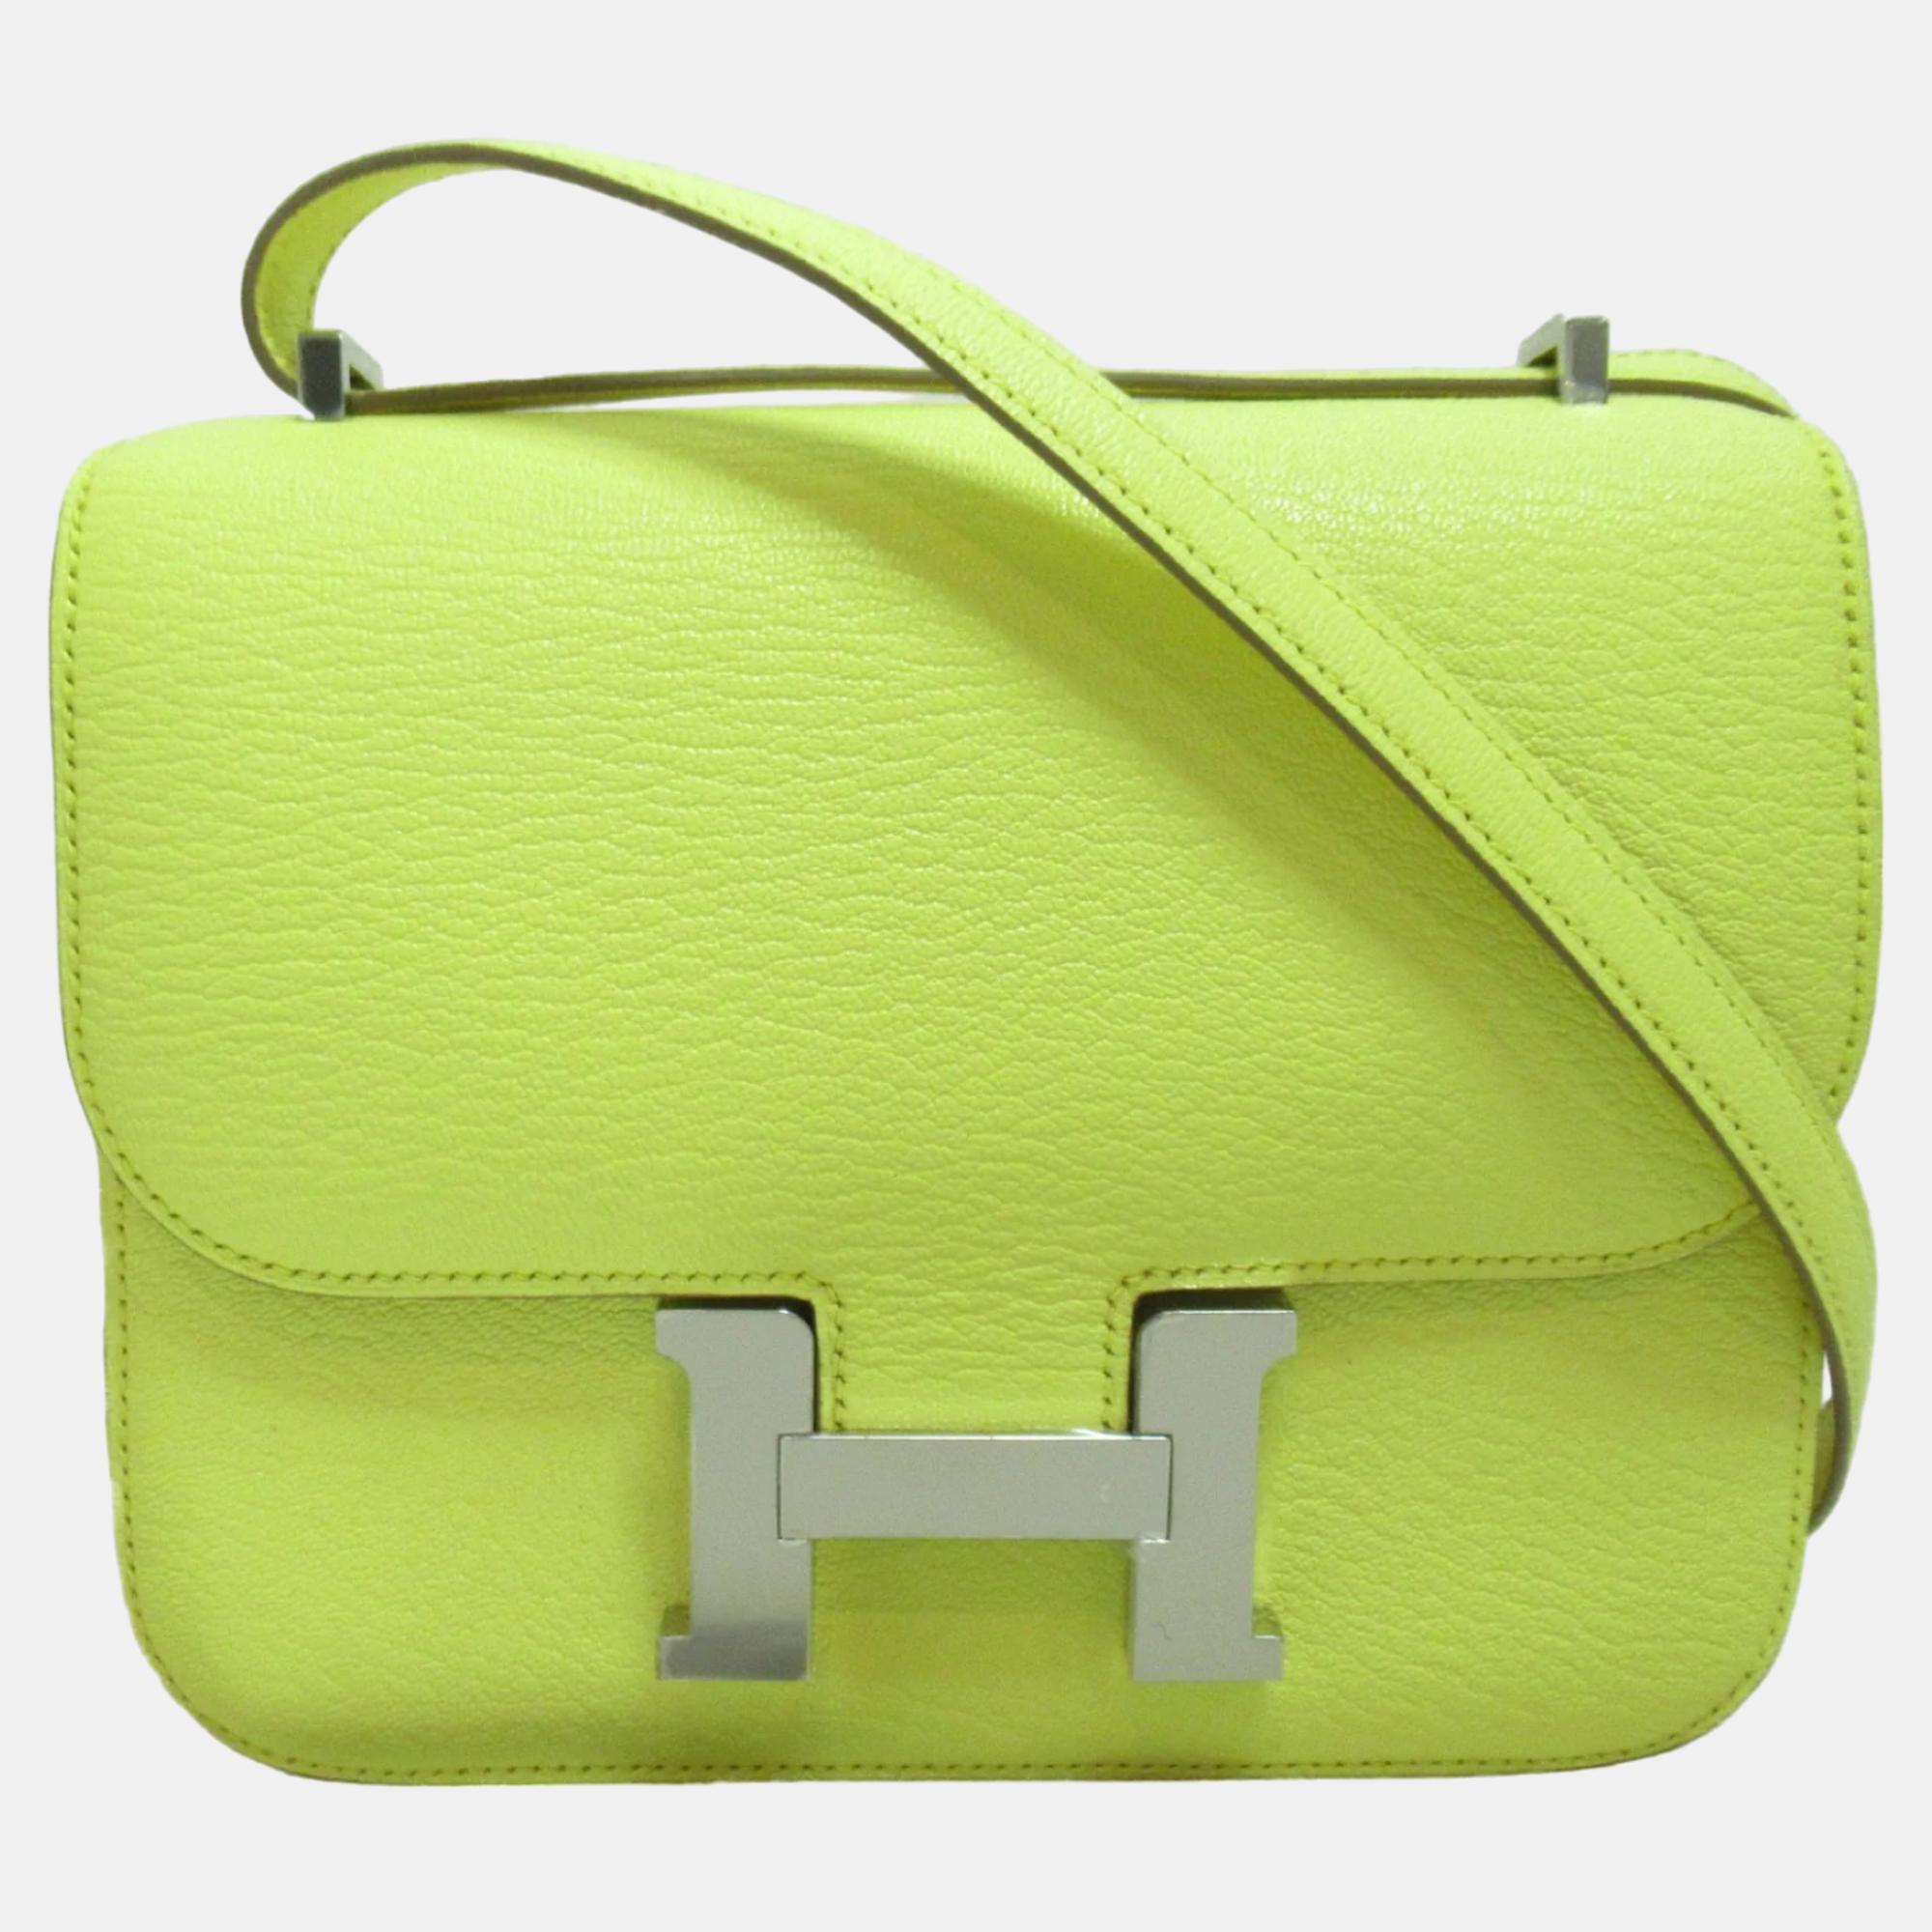 Hermes yellow limoncello shave leather mini constance handbag